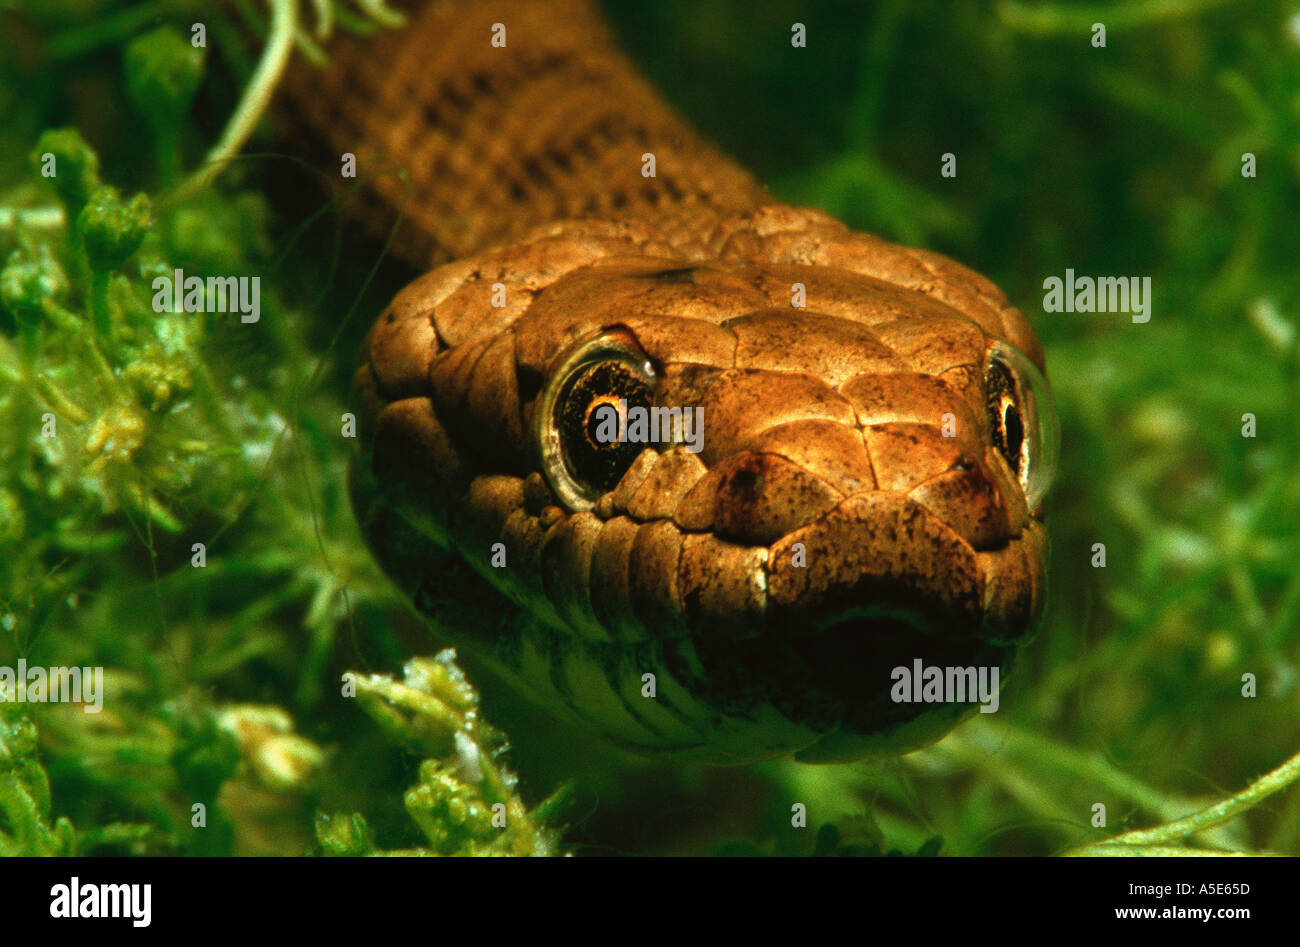 close up of a snake under water, natrix tessellata Stock Photo